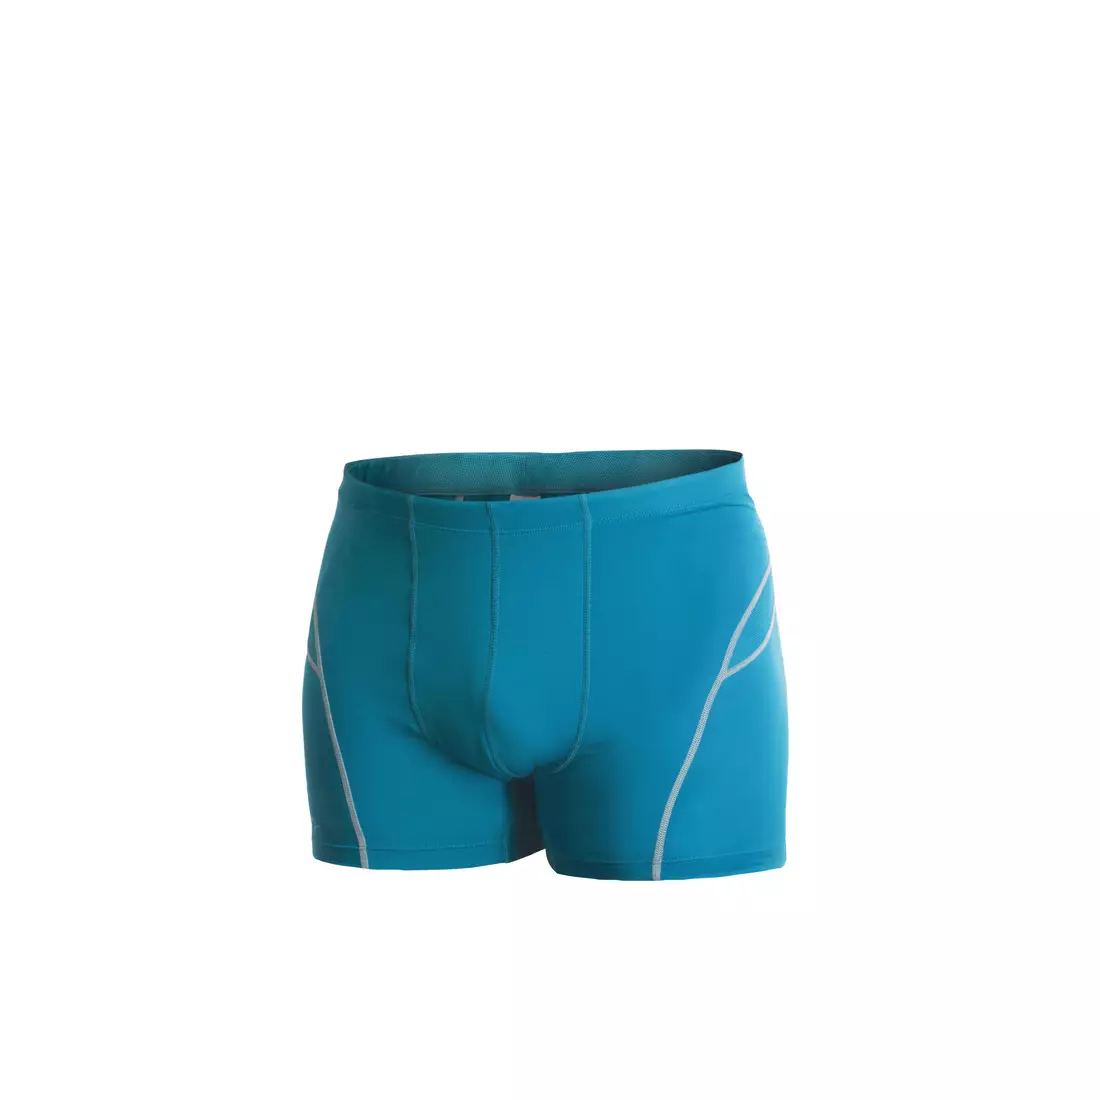 CRAFT COOL - thermal underwear - 193682-1330 - men's boxer shorts